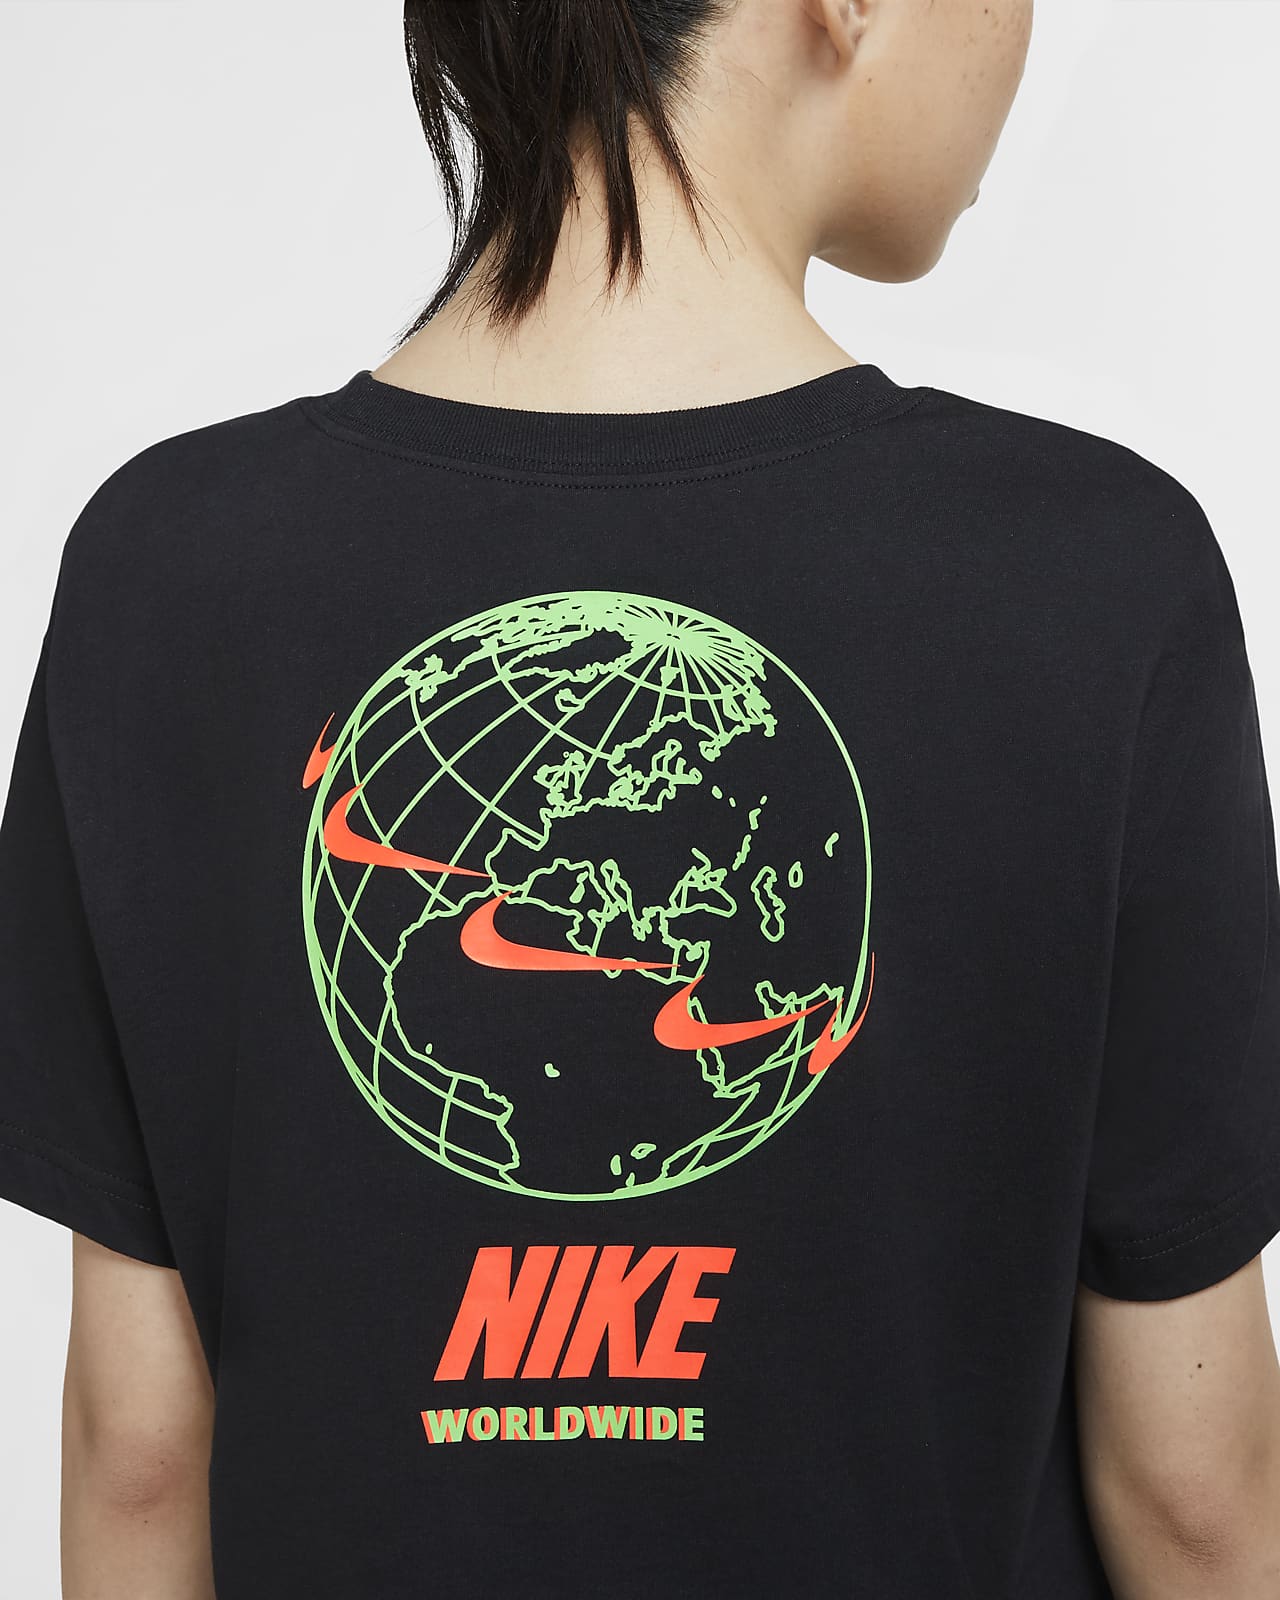 worldwide nike shirt